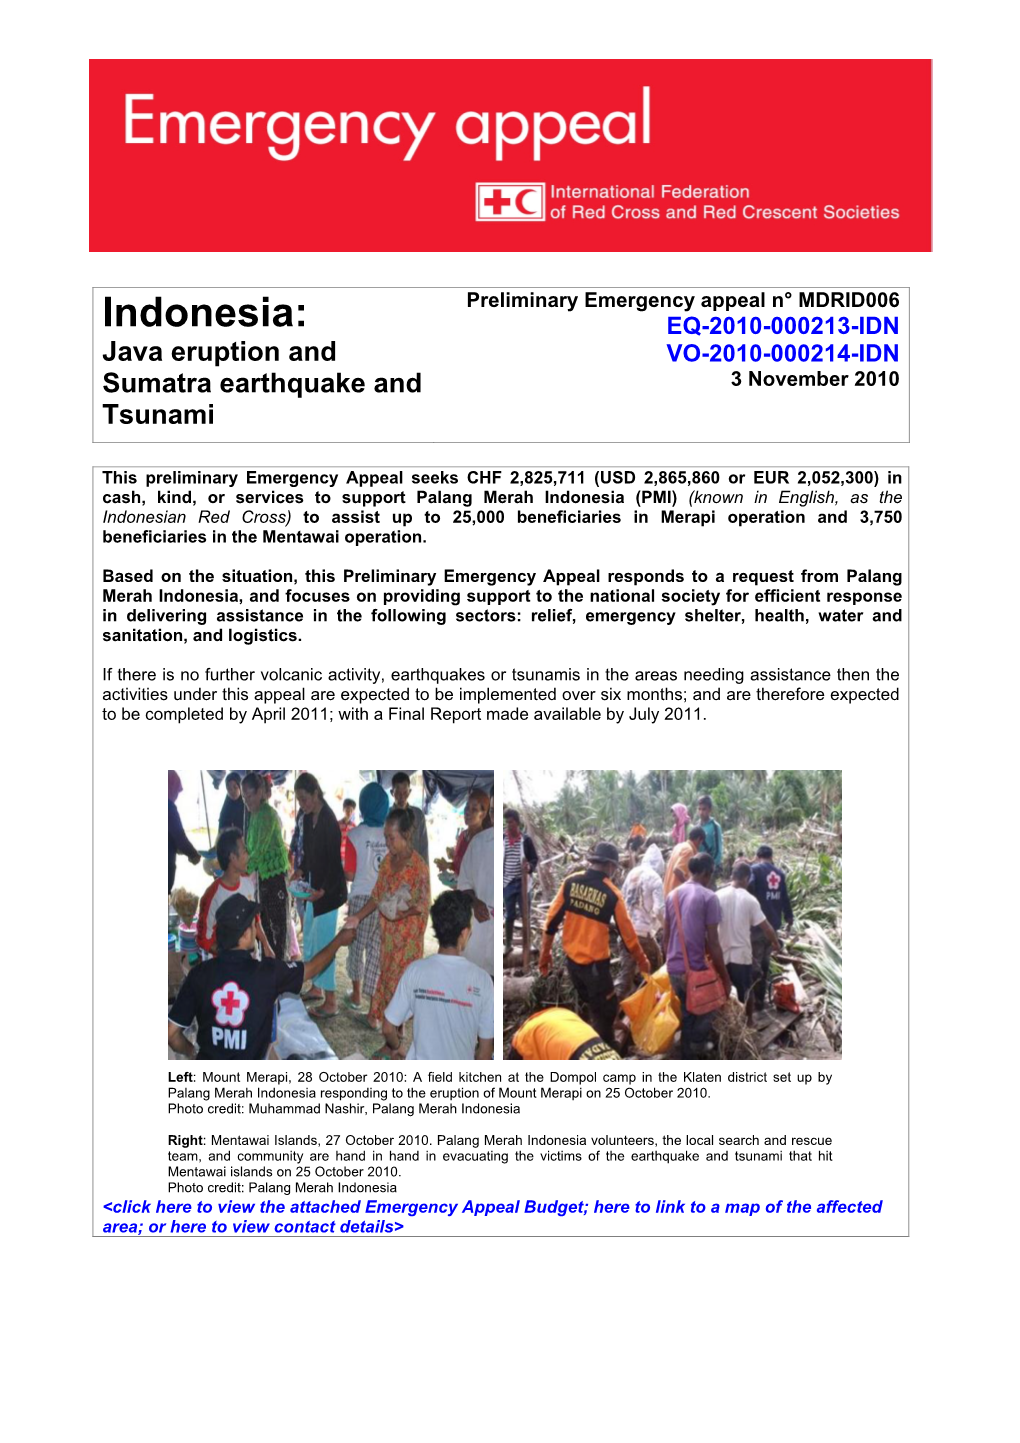 Preliminary Emergency Appeal N° MDRID006 Indonesia: EQ-2010-000213-IDN Java Eruption and VO-2010-000214-IDN Sumatra Earthquake and 3 November 2010 Tsunami